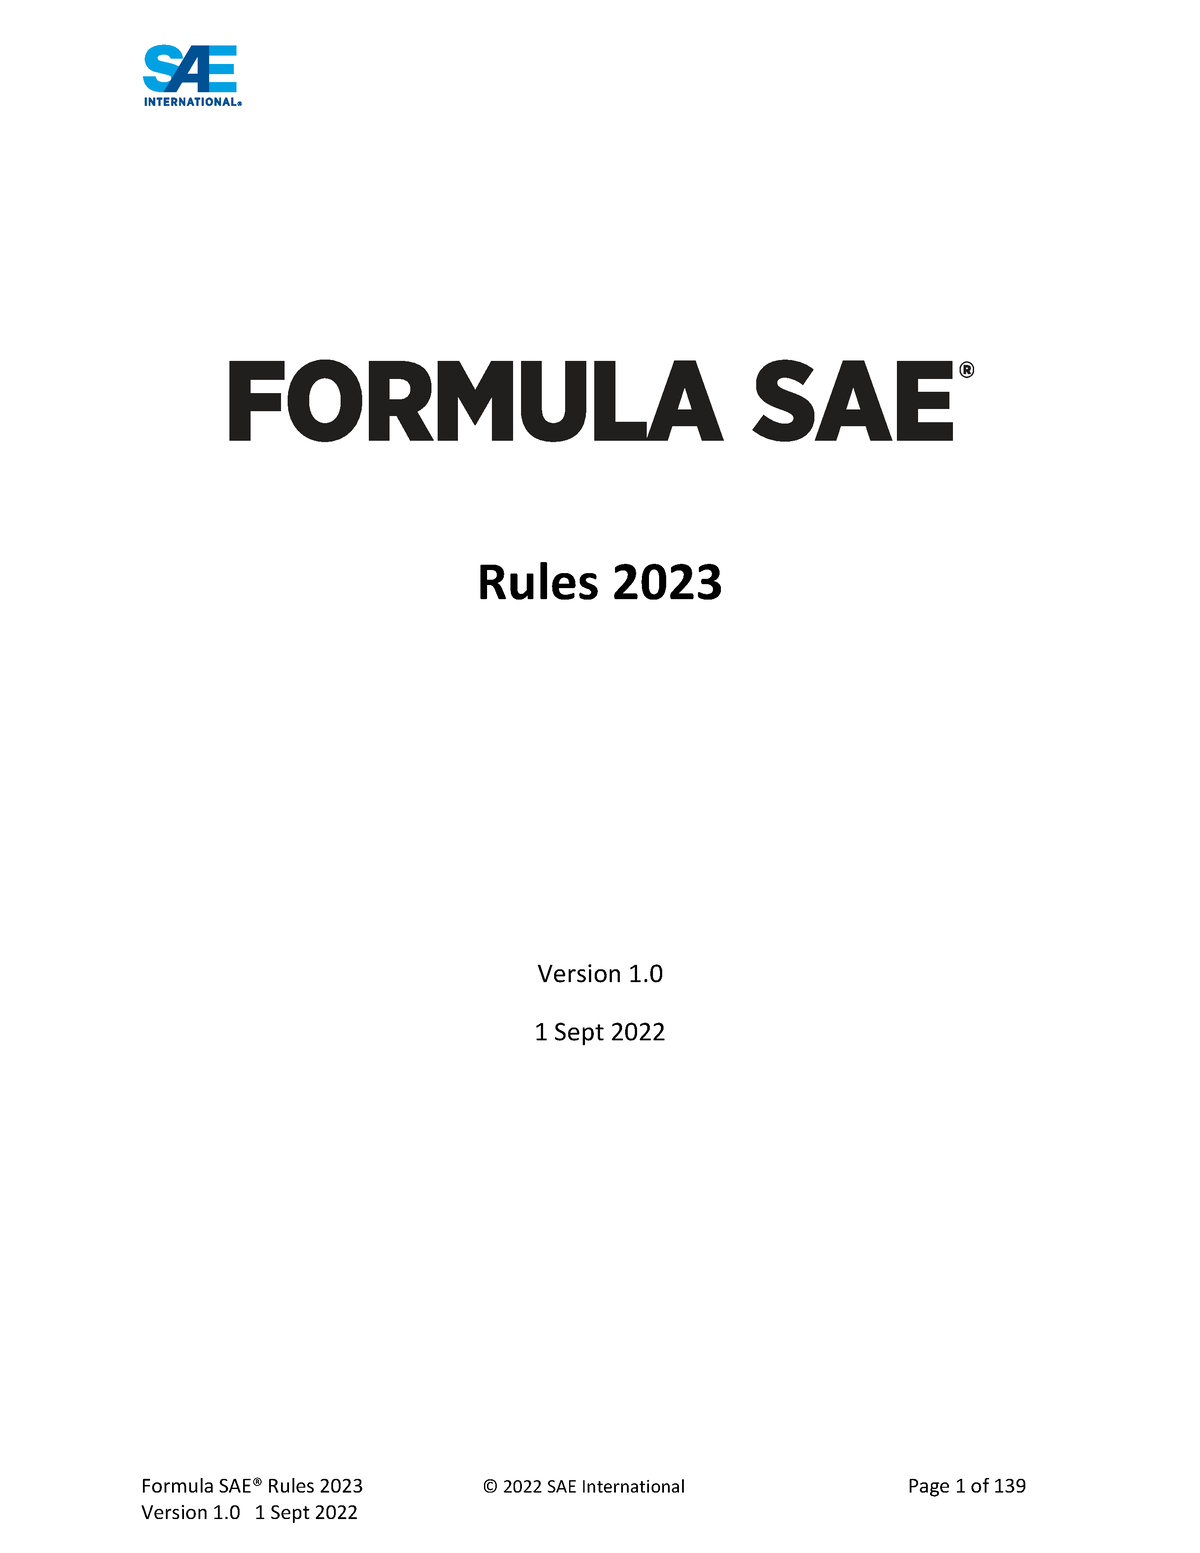 FSAE Rules 2023 V1 texto reglas de formula sae TABLE OF CONTENTS